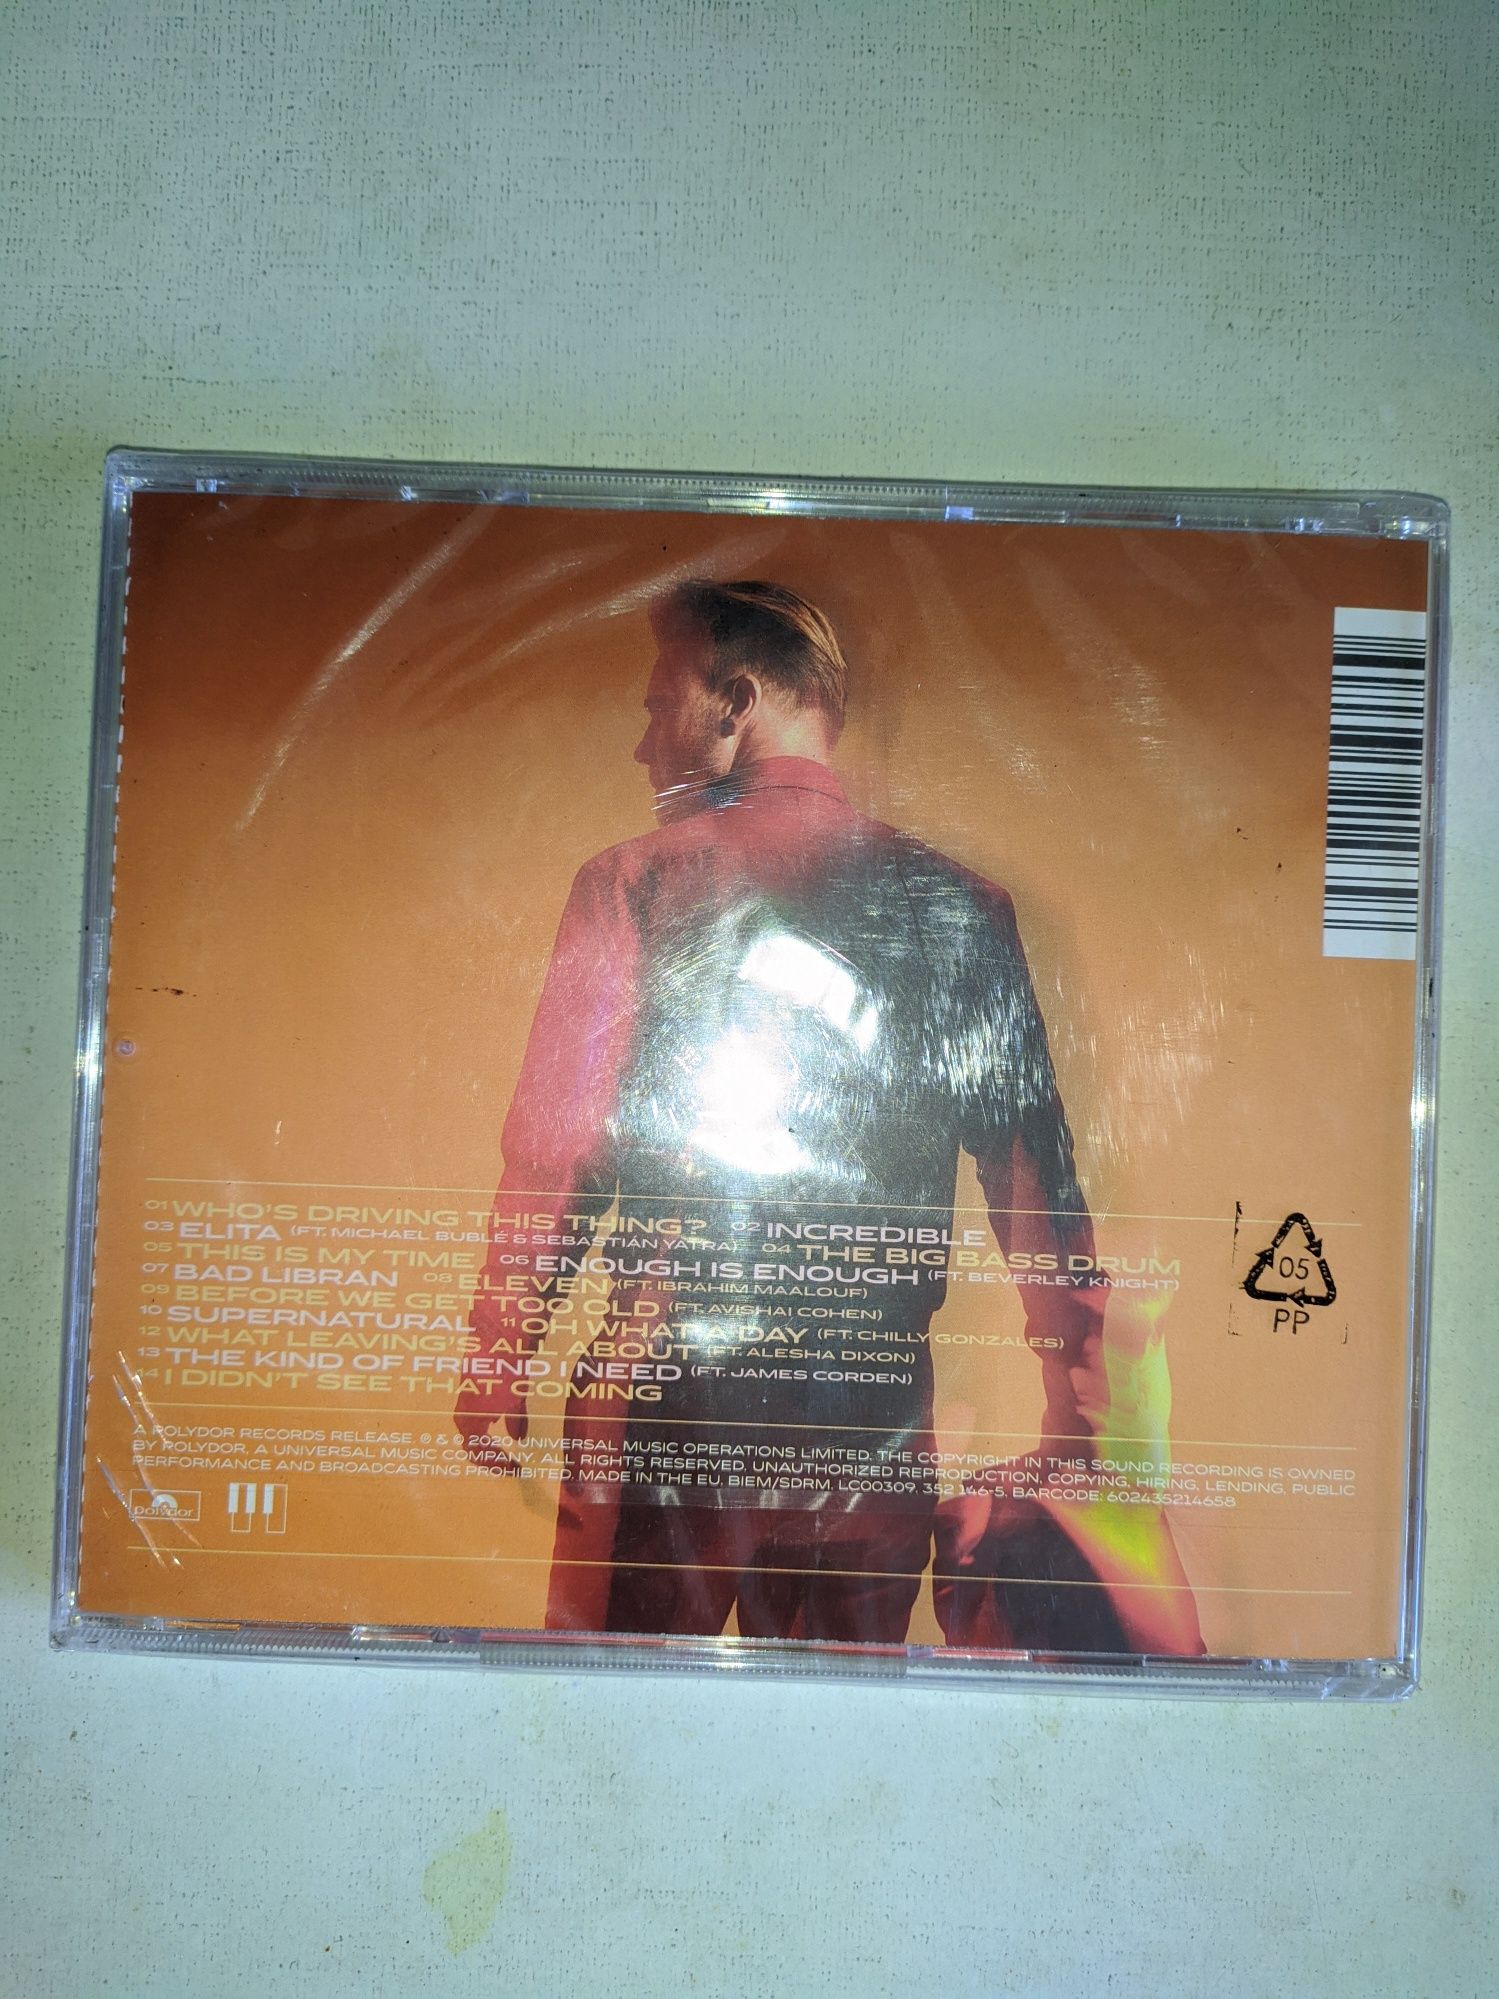 Фірмовий Аудіо CD Gary Barlow Music made by humans